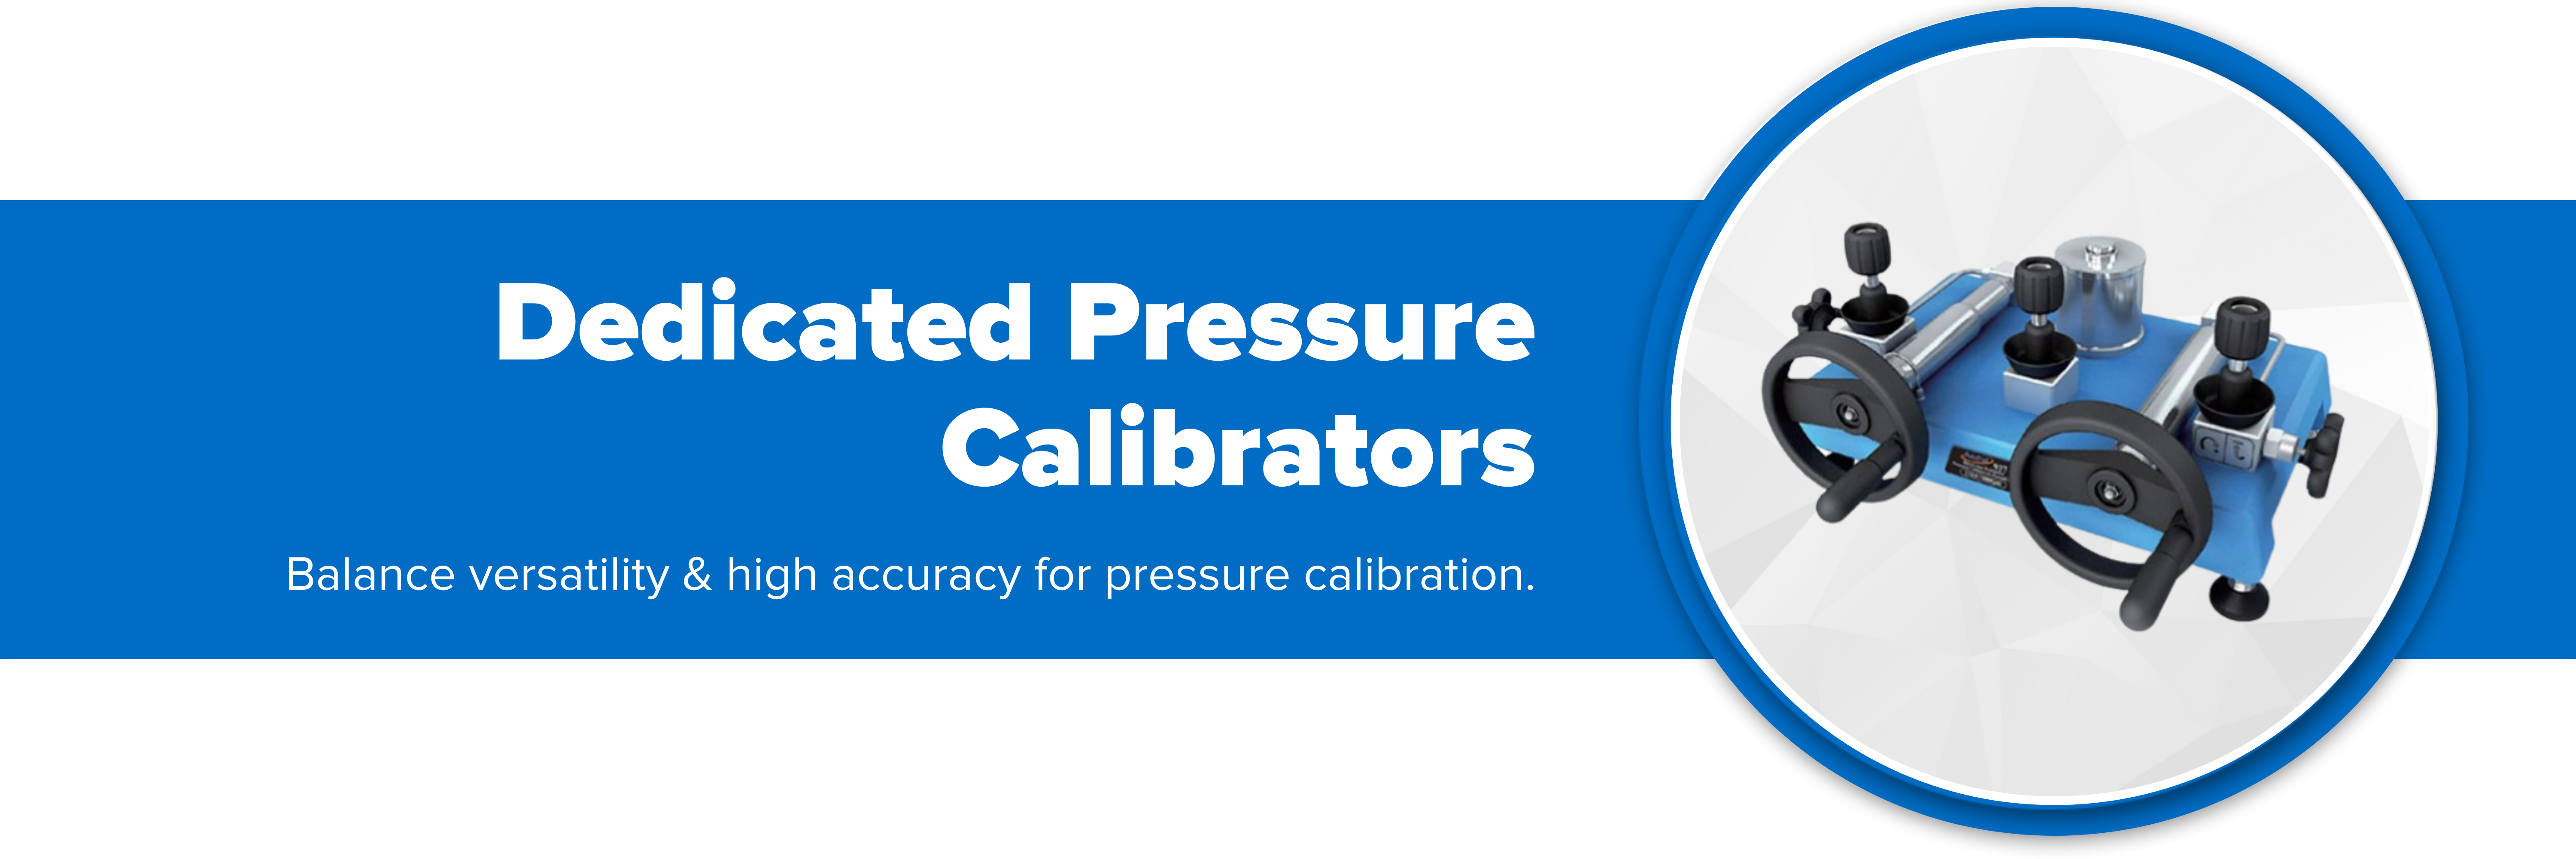 Header image with text "Dedicated Pressure Calibrators"